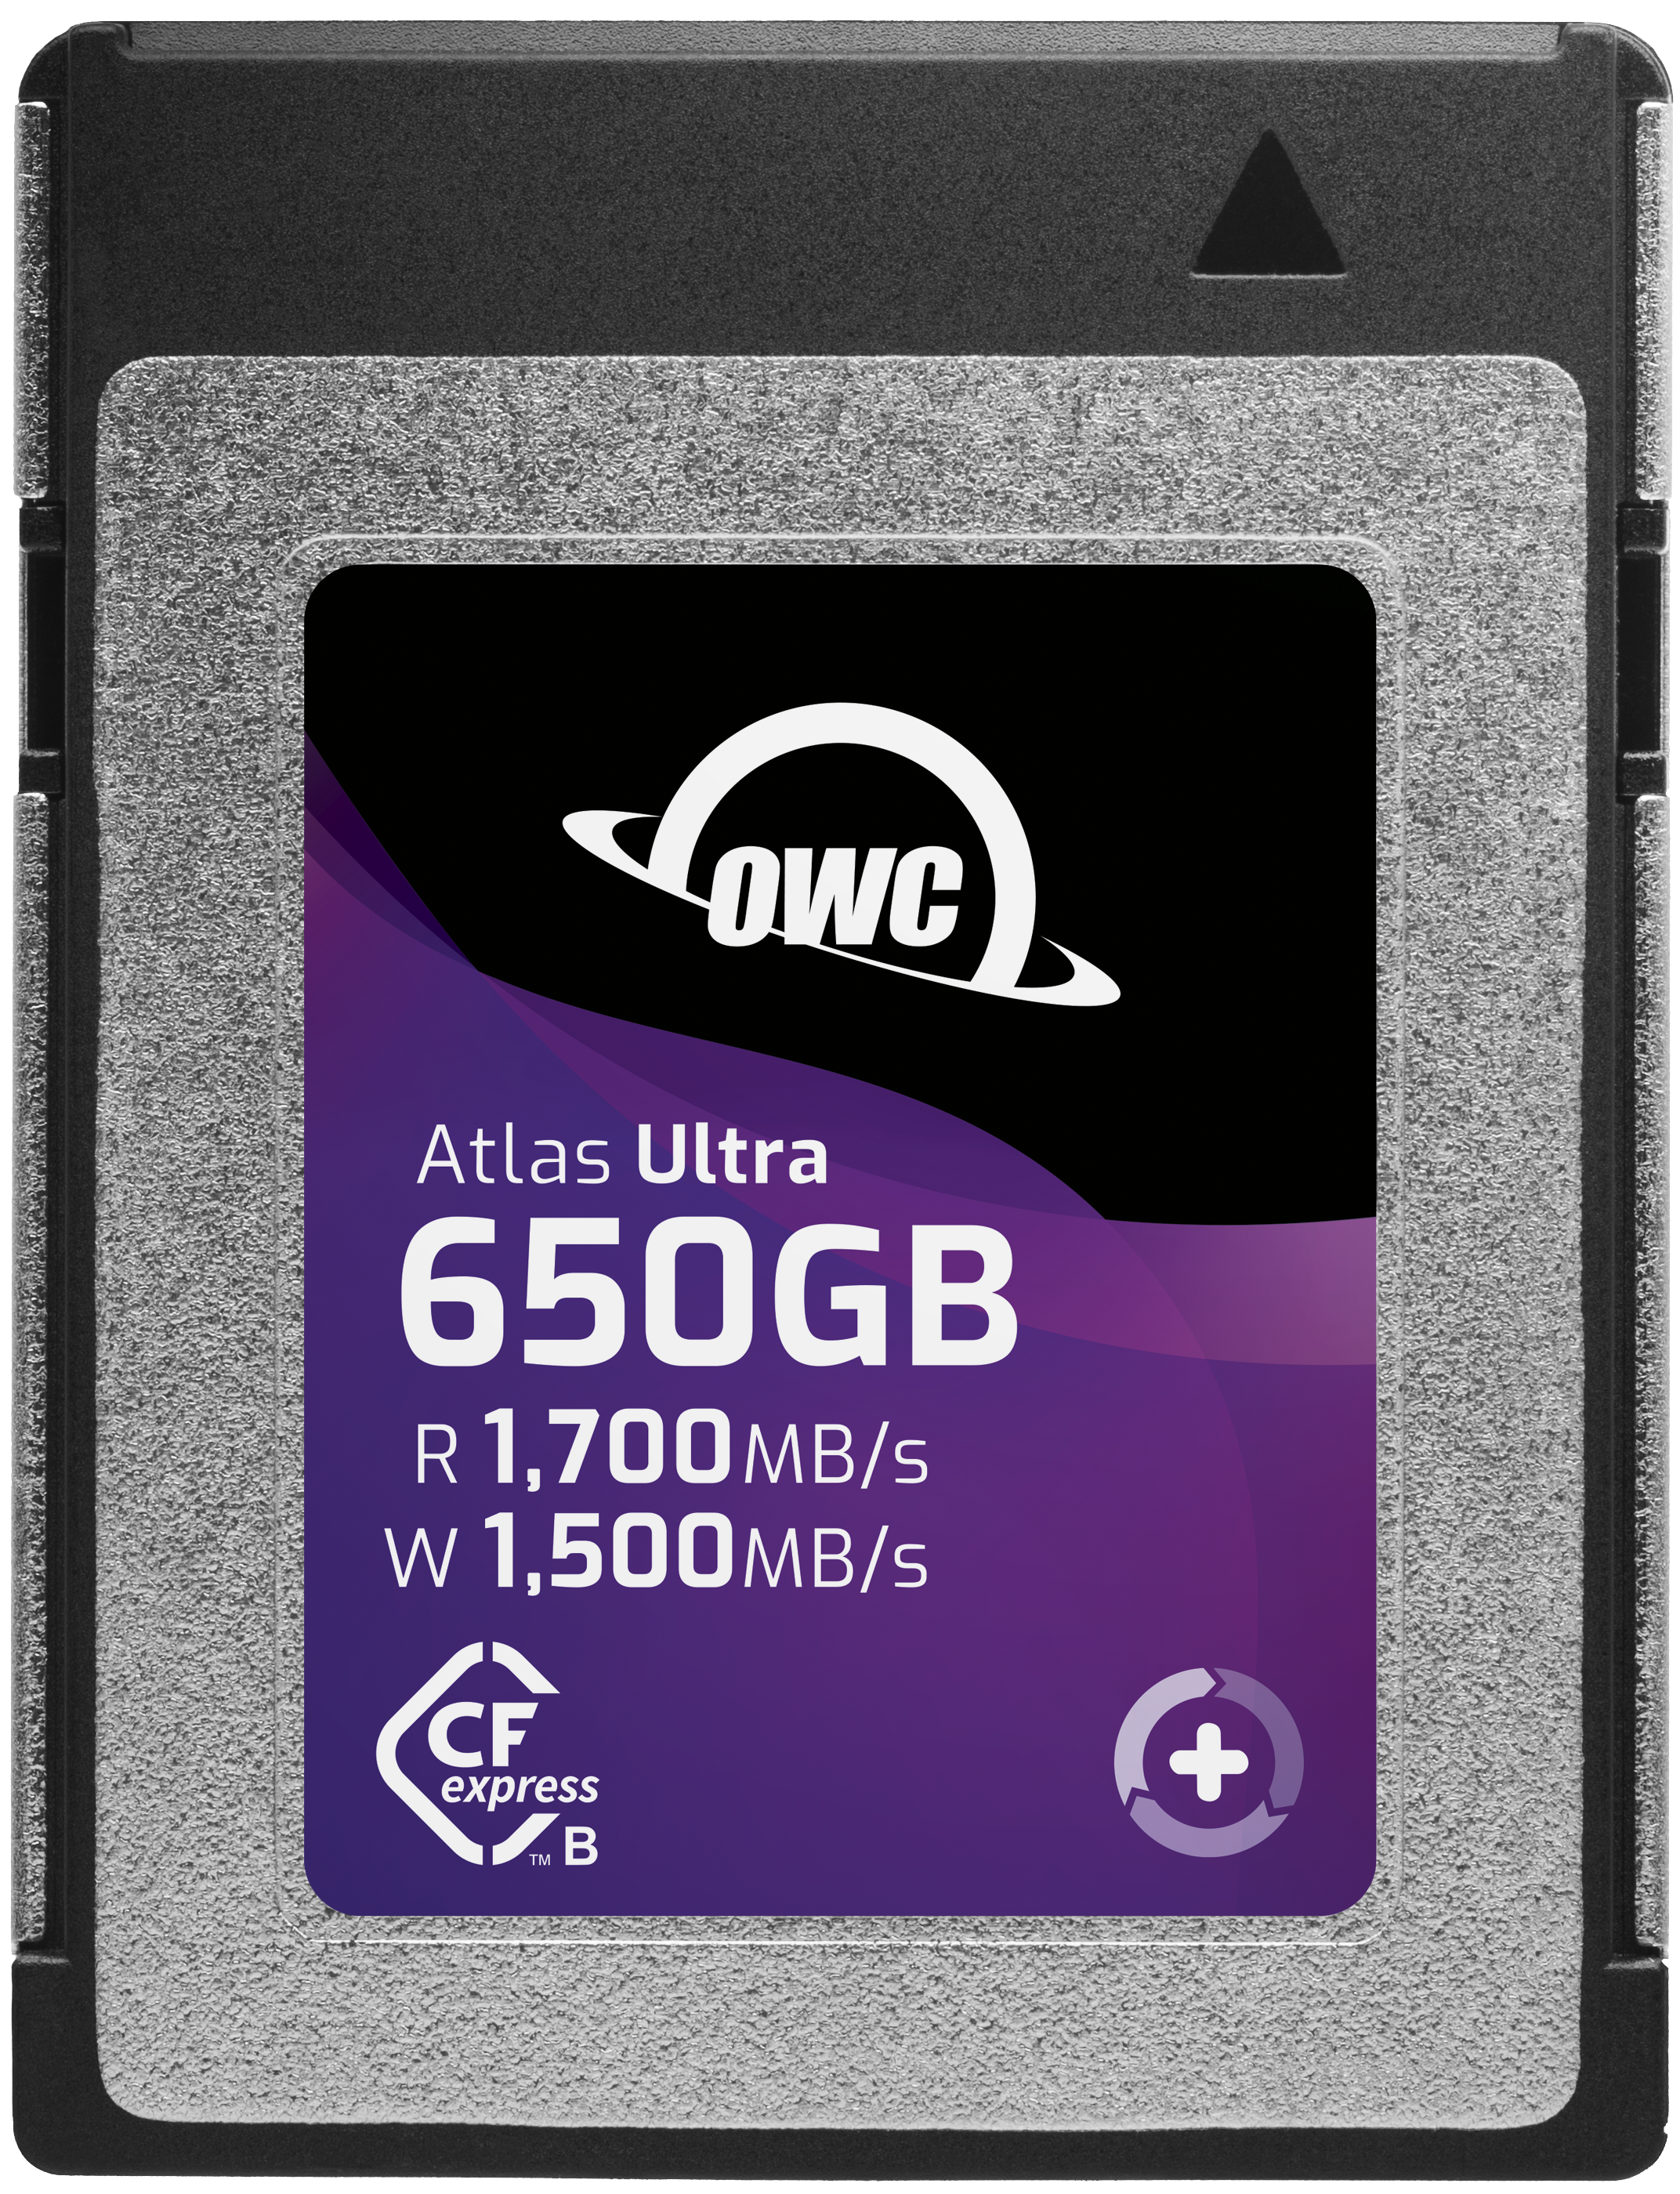 560GB OWC Atlas Ultra CFexpress Memory Card